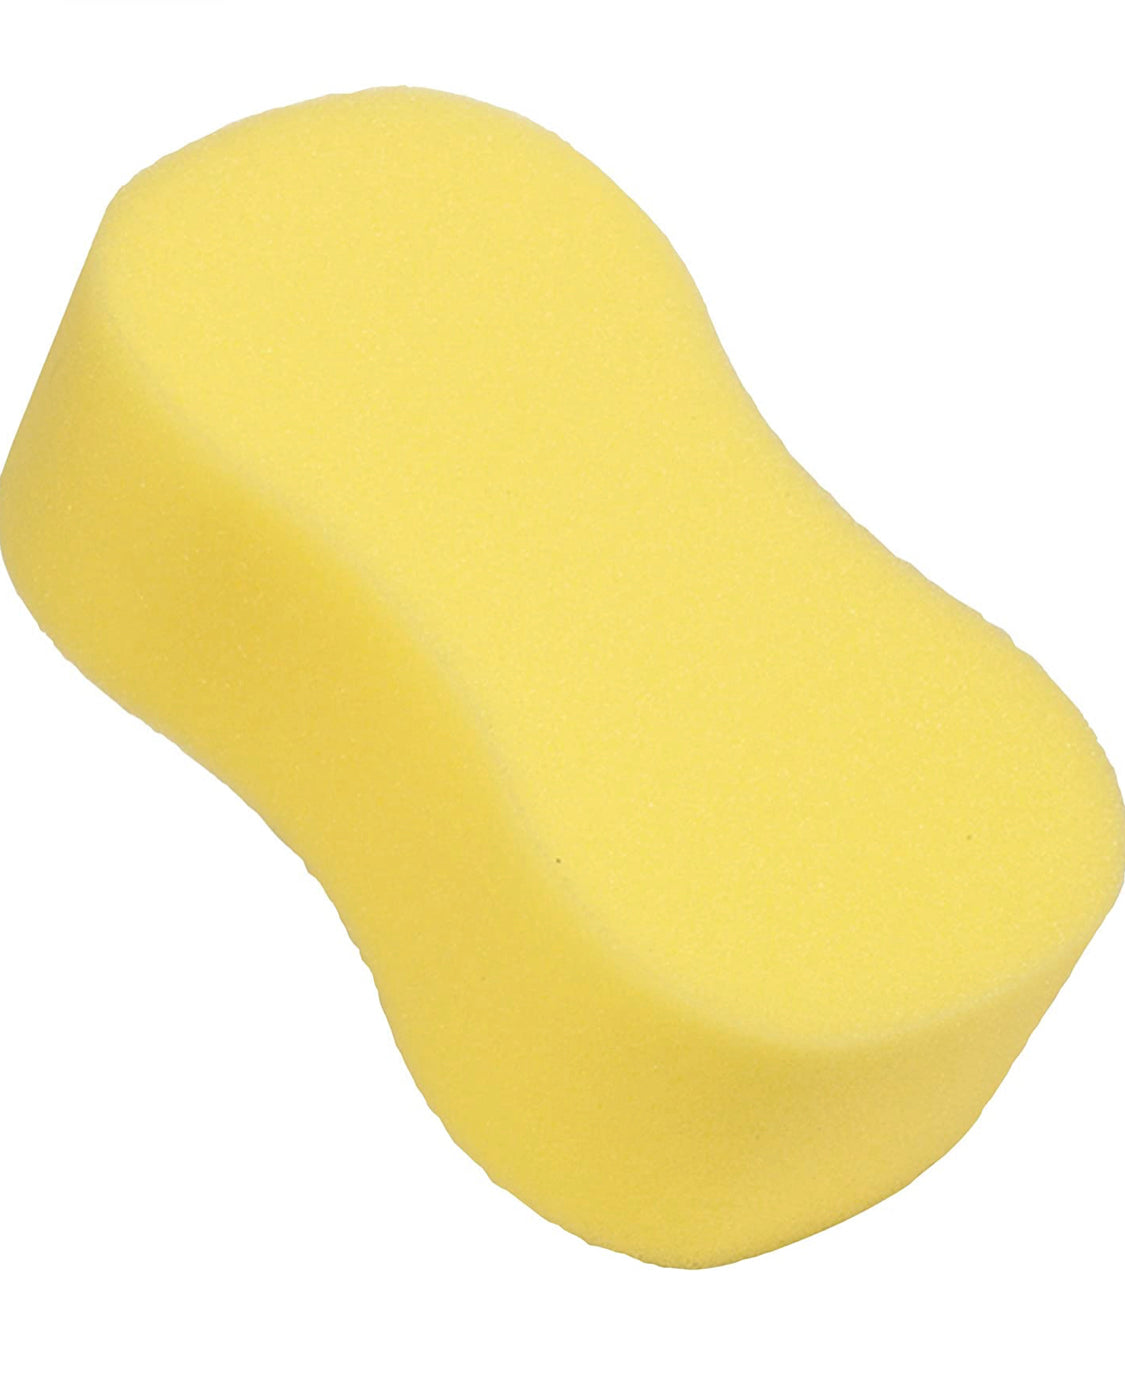 Large Synthetic Body Sponge